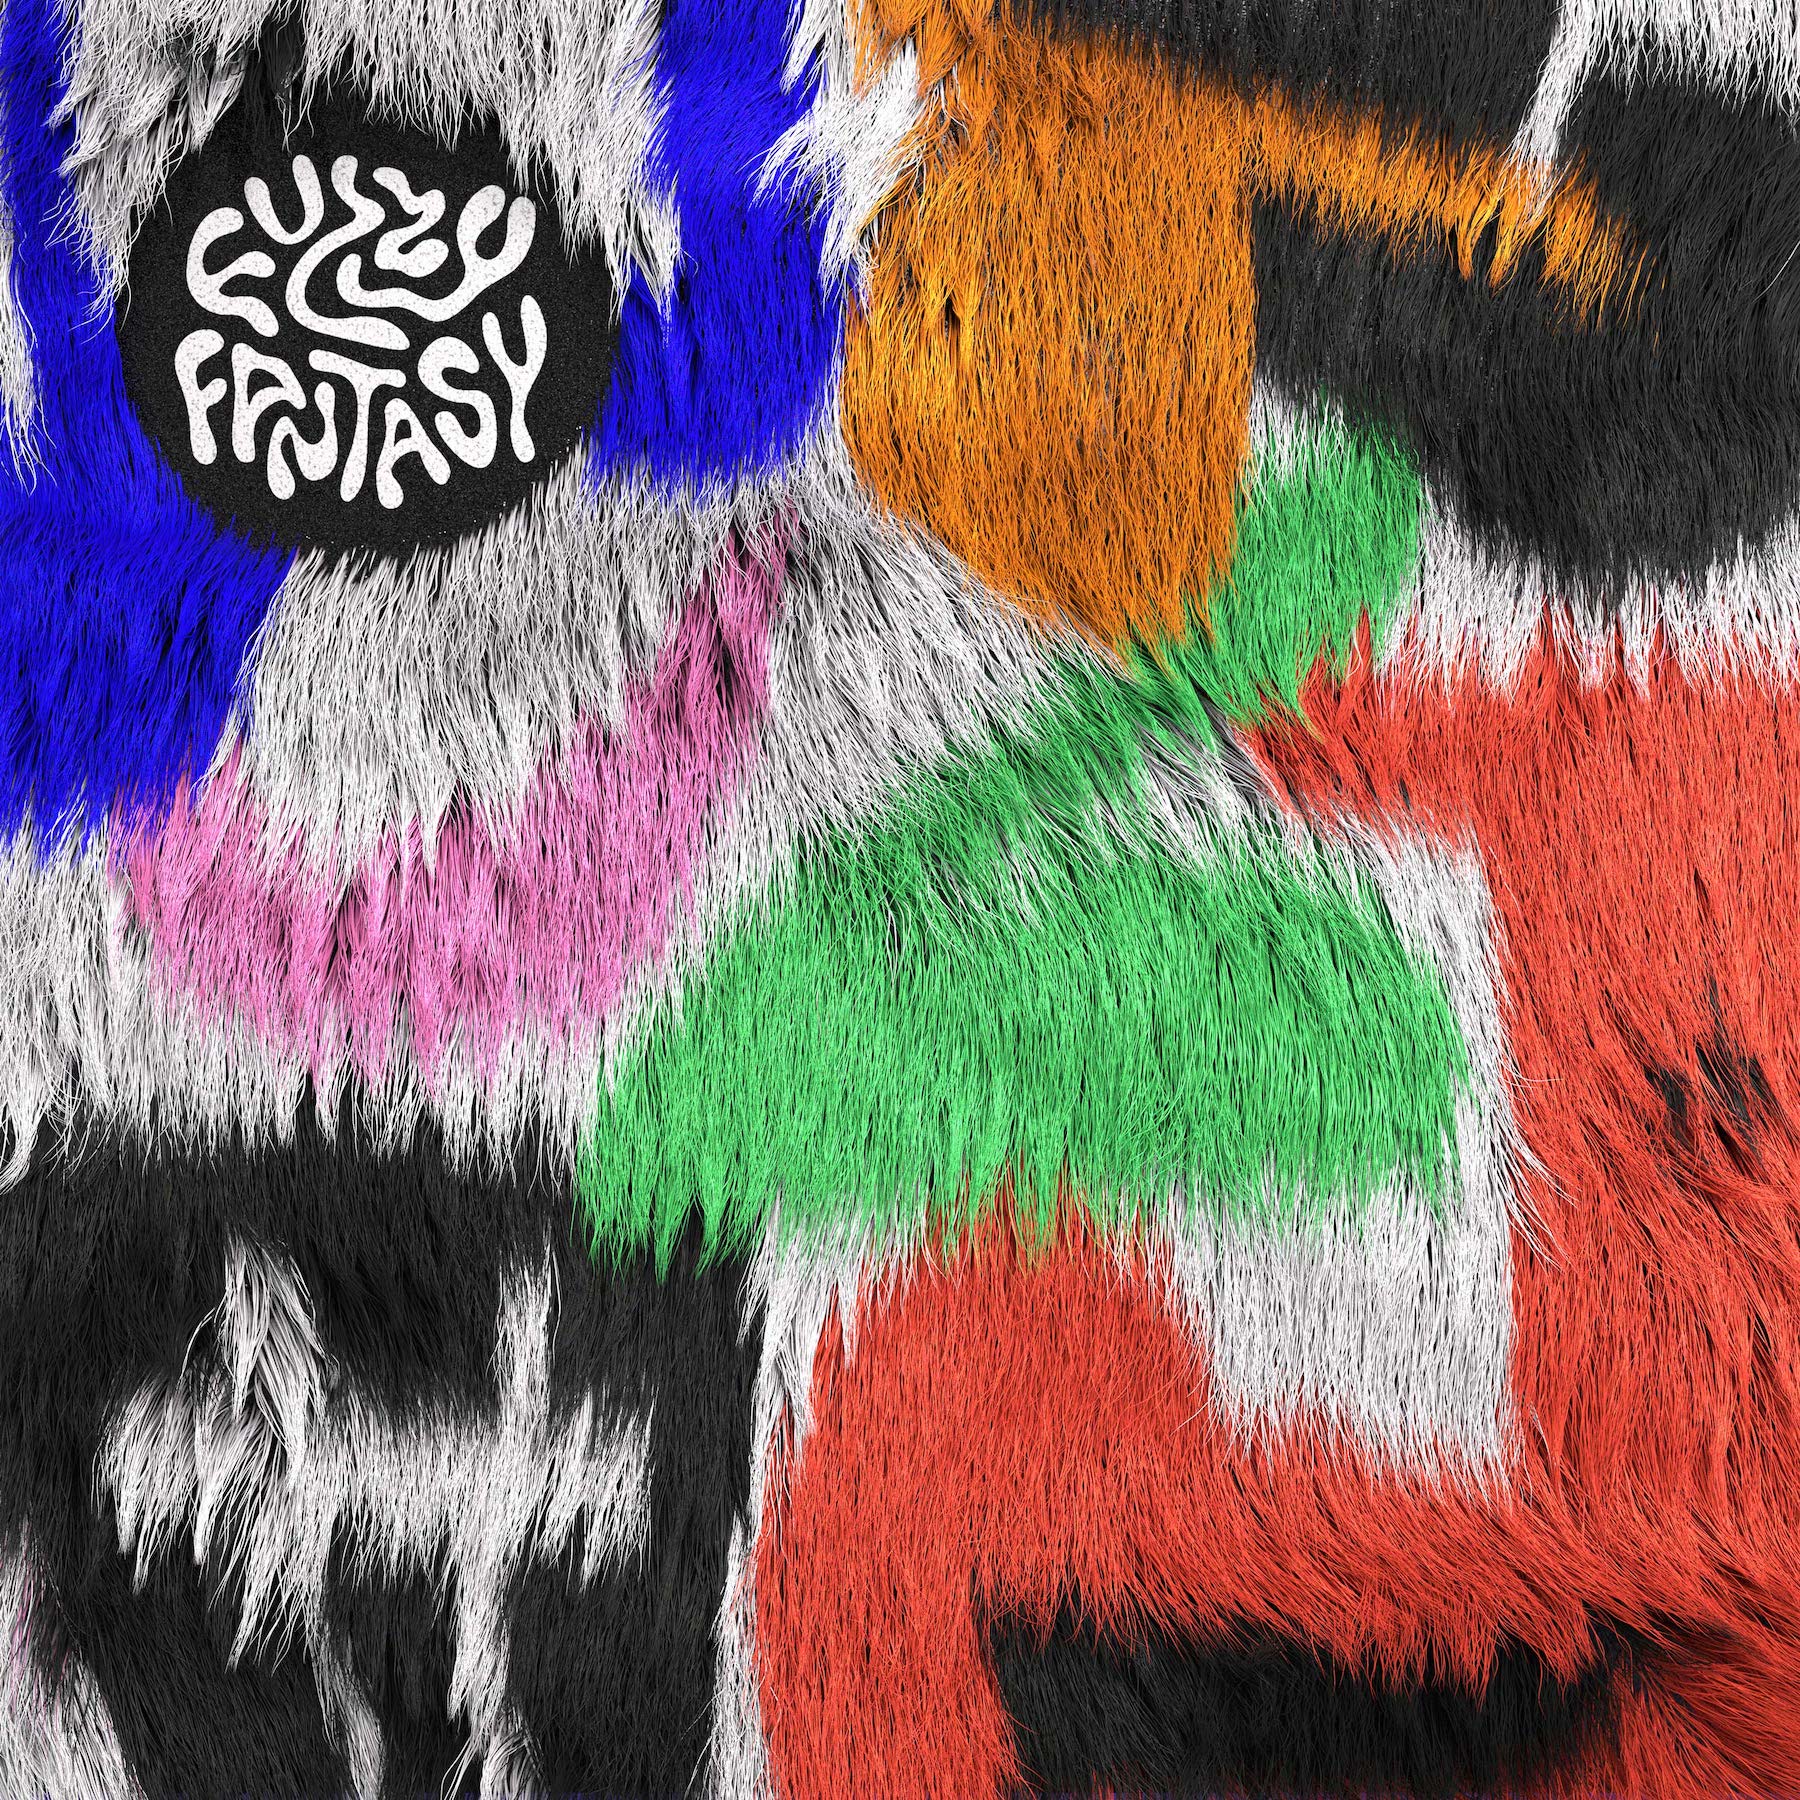 COMA announce new album Fuzzy Fantasy via City Slang Records